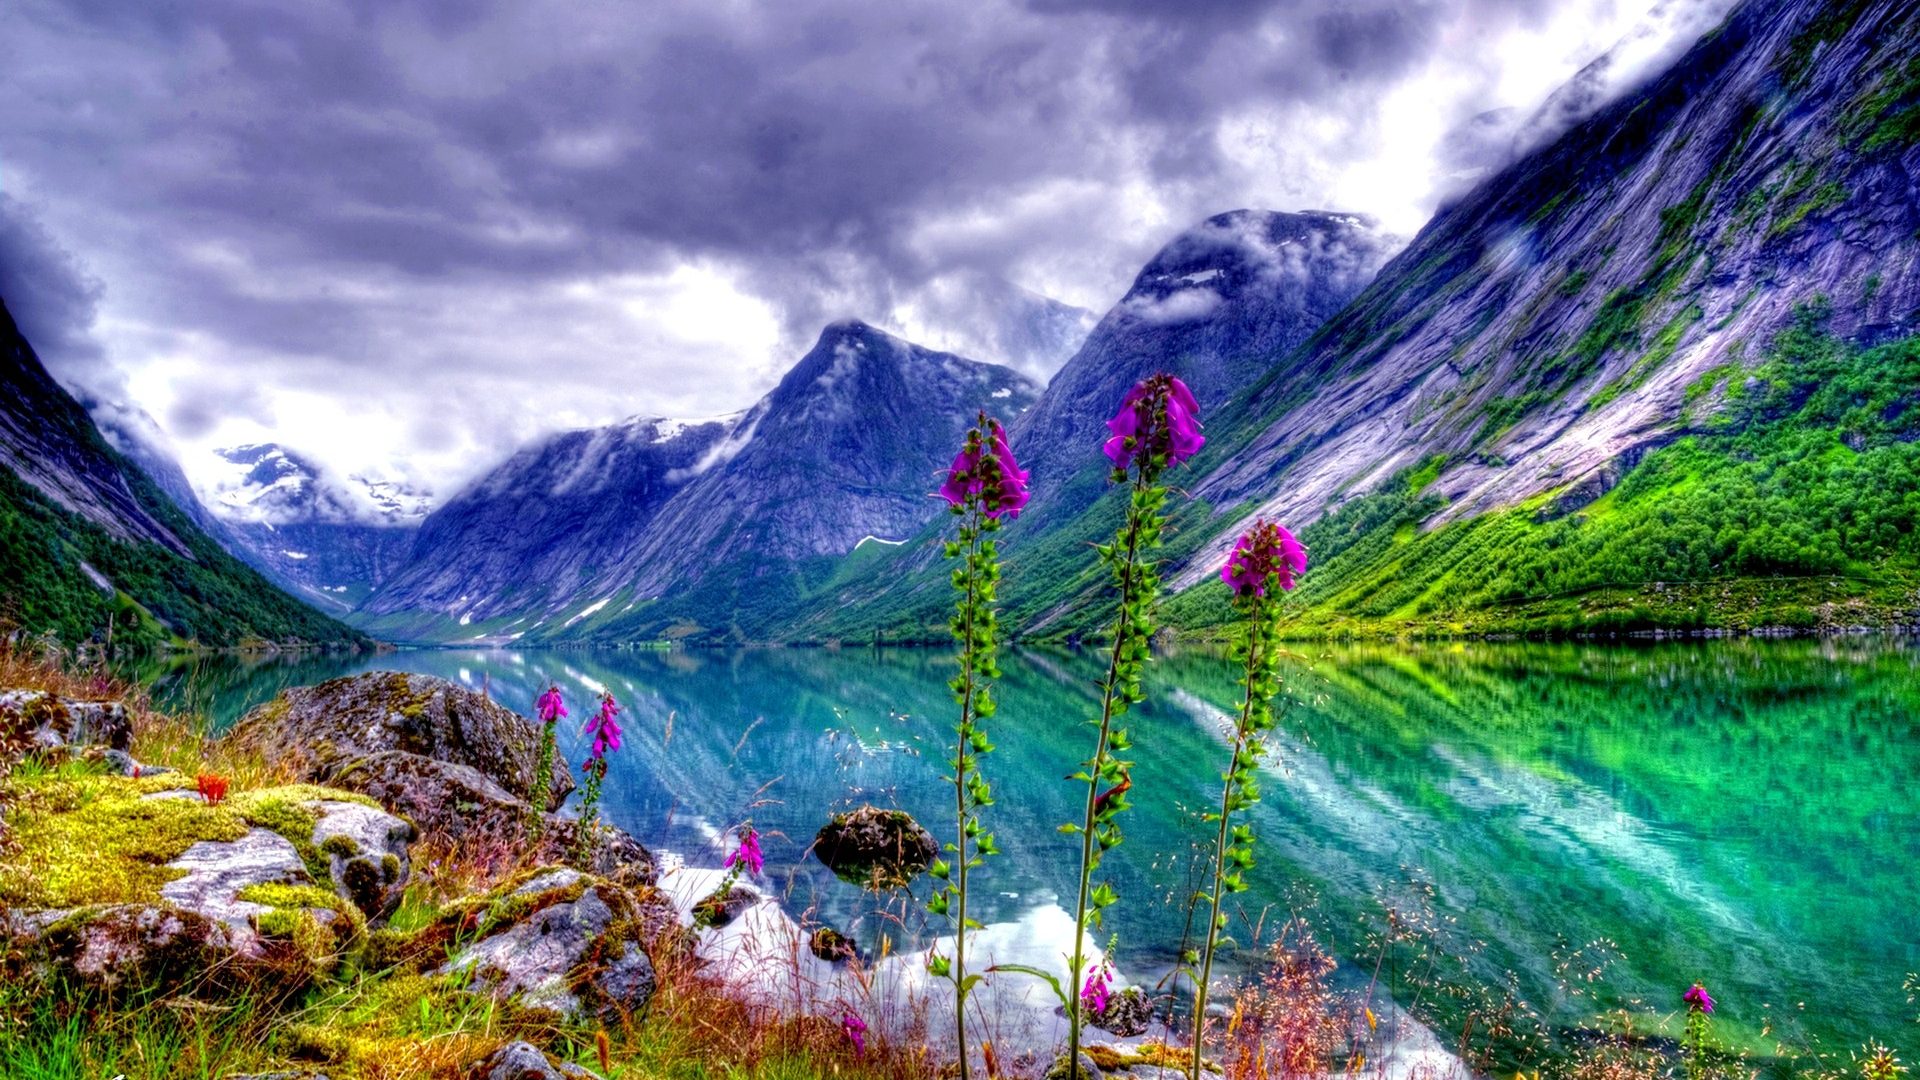 Natural Landscape River Valley Flowers Sky Mountain Picture For Desktop Hd  Wallpaper Pc Tablet Mobile 1920x1080 : 